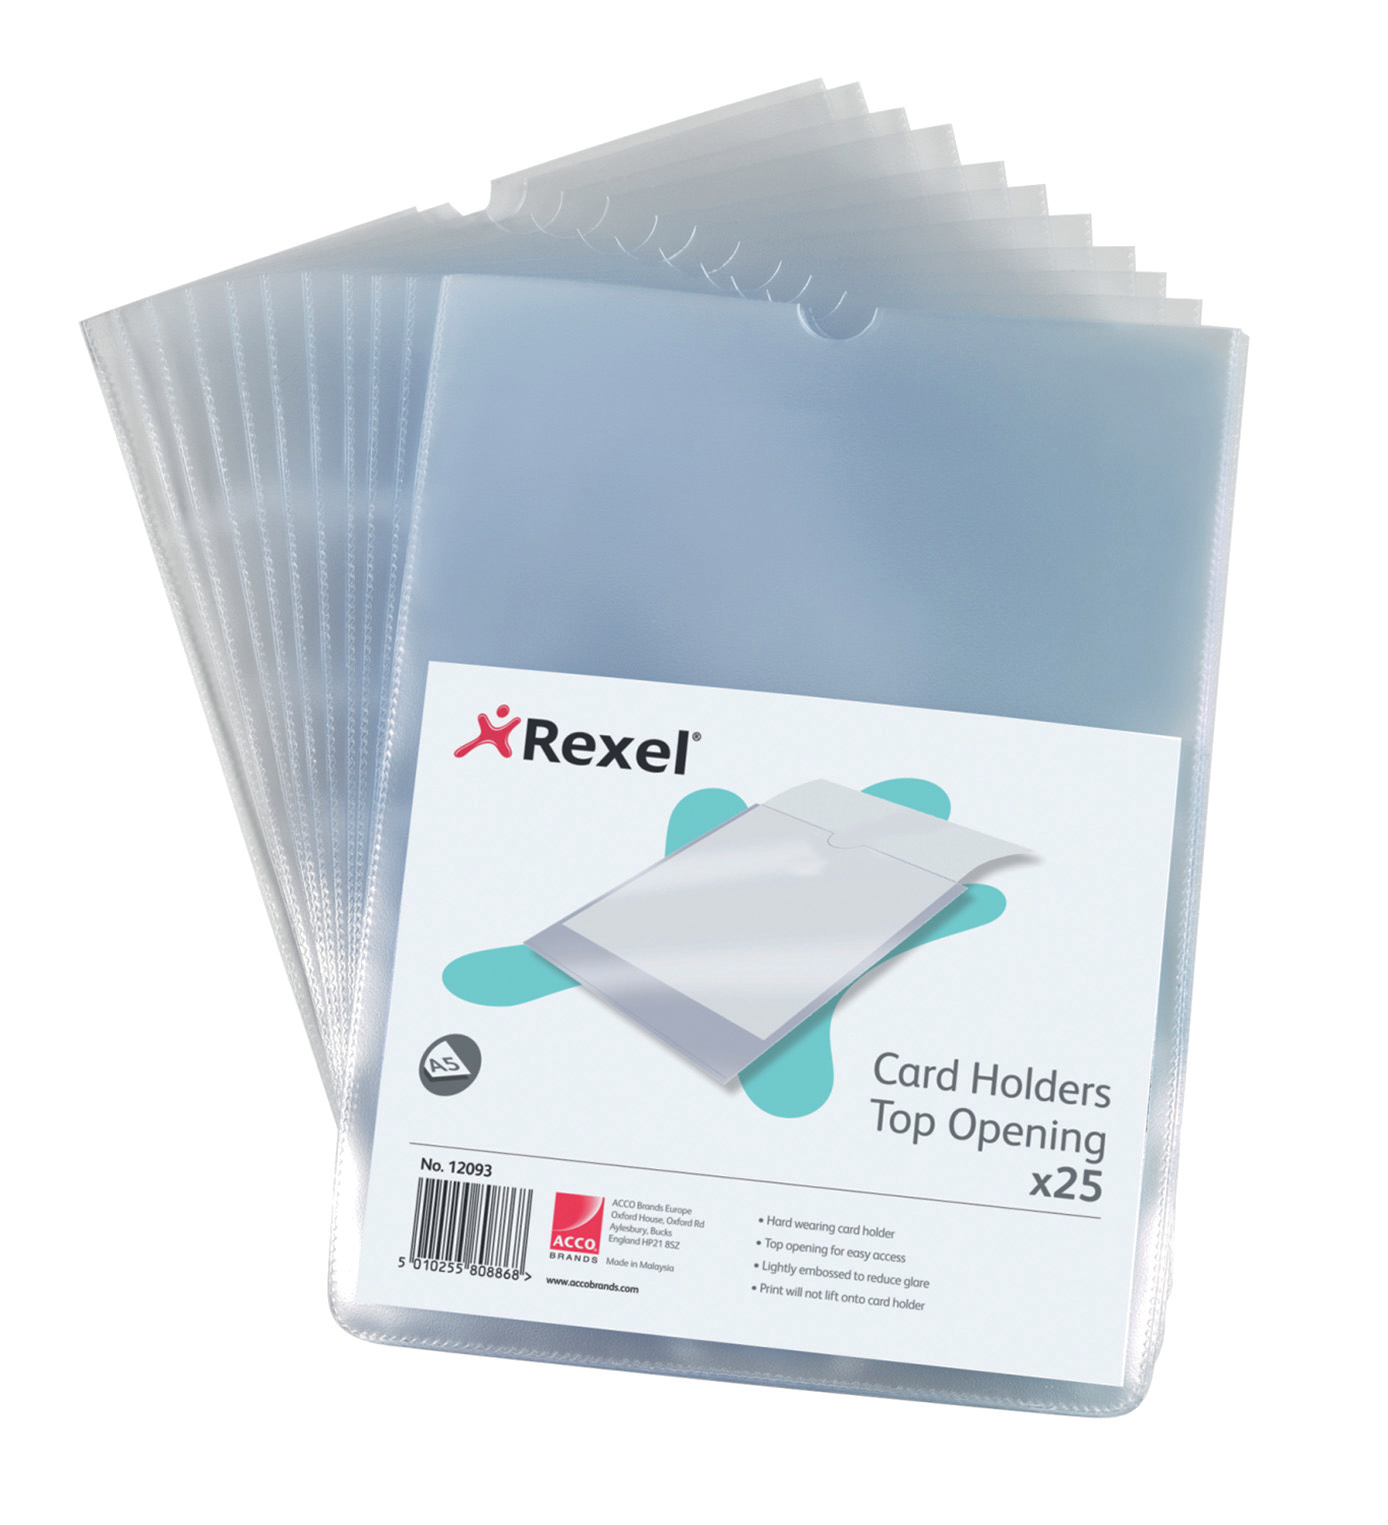 Rexel Nyrex Card Holder Polypropylene A5 Top Opening Clear (Pack 25) 12093